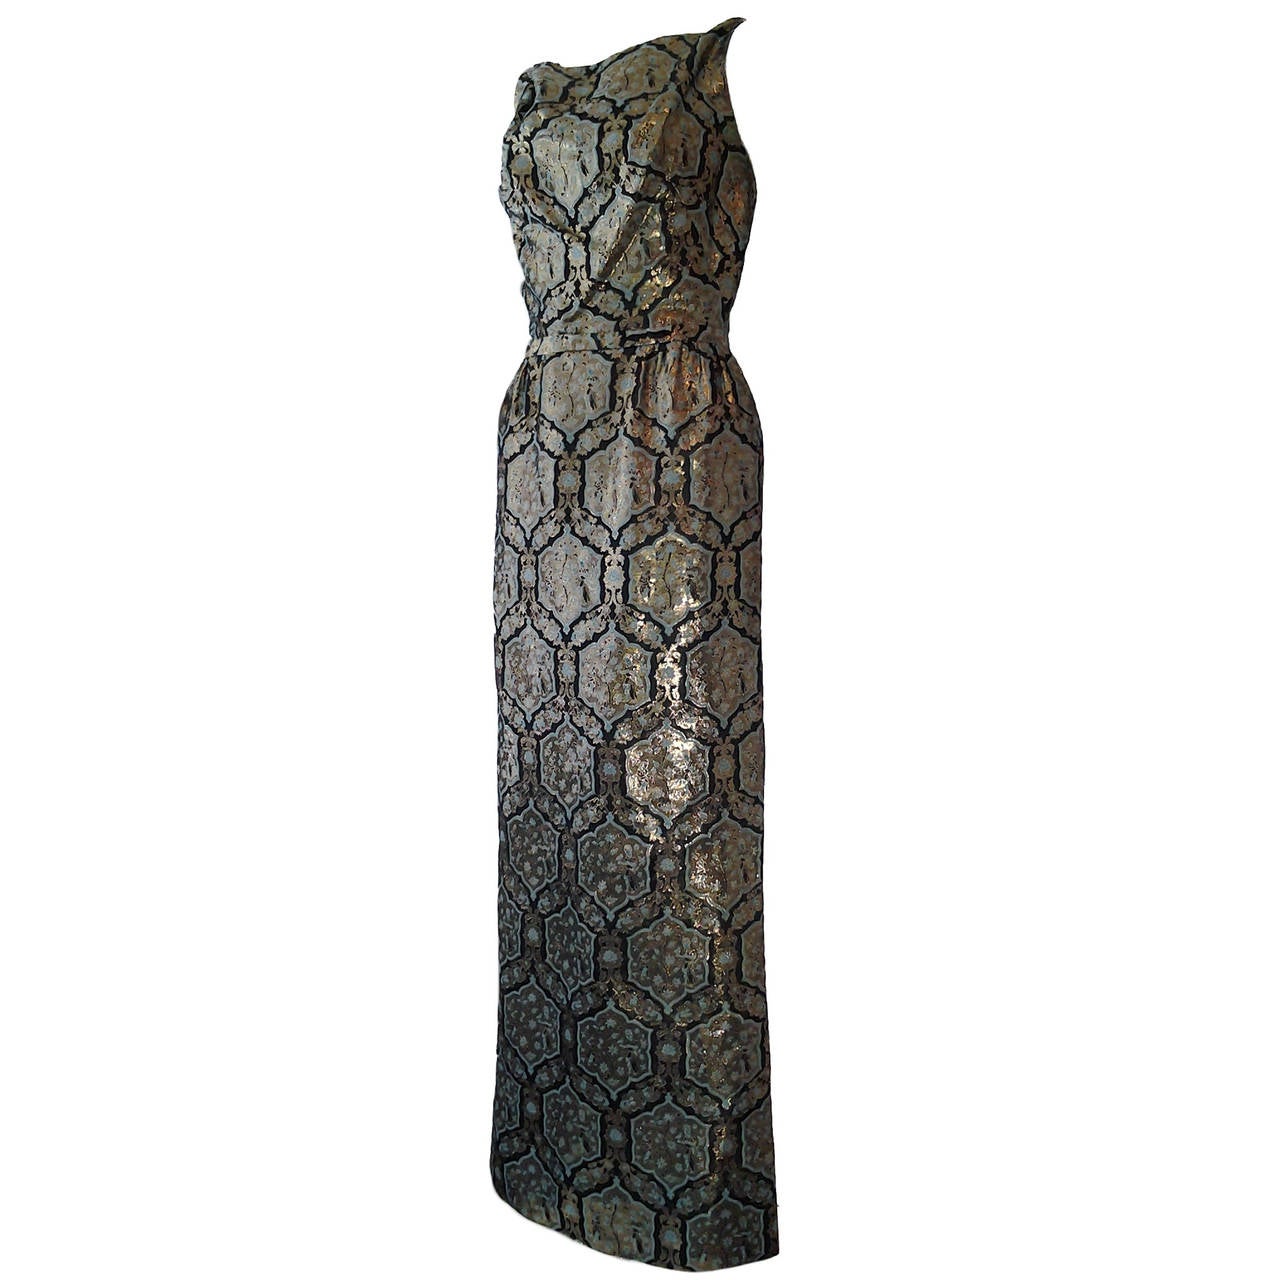 1960s Full-Length Lame Brocade Sheath Dress in "Moorish-Inspired" Pattern